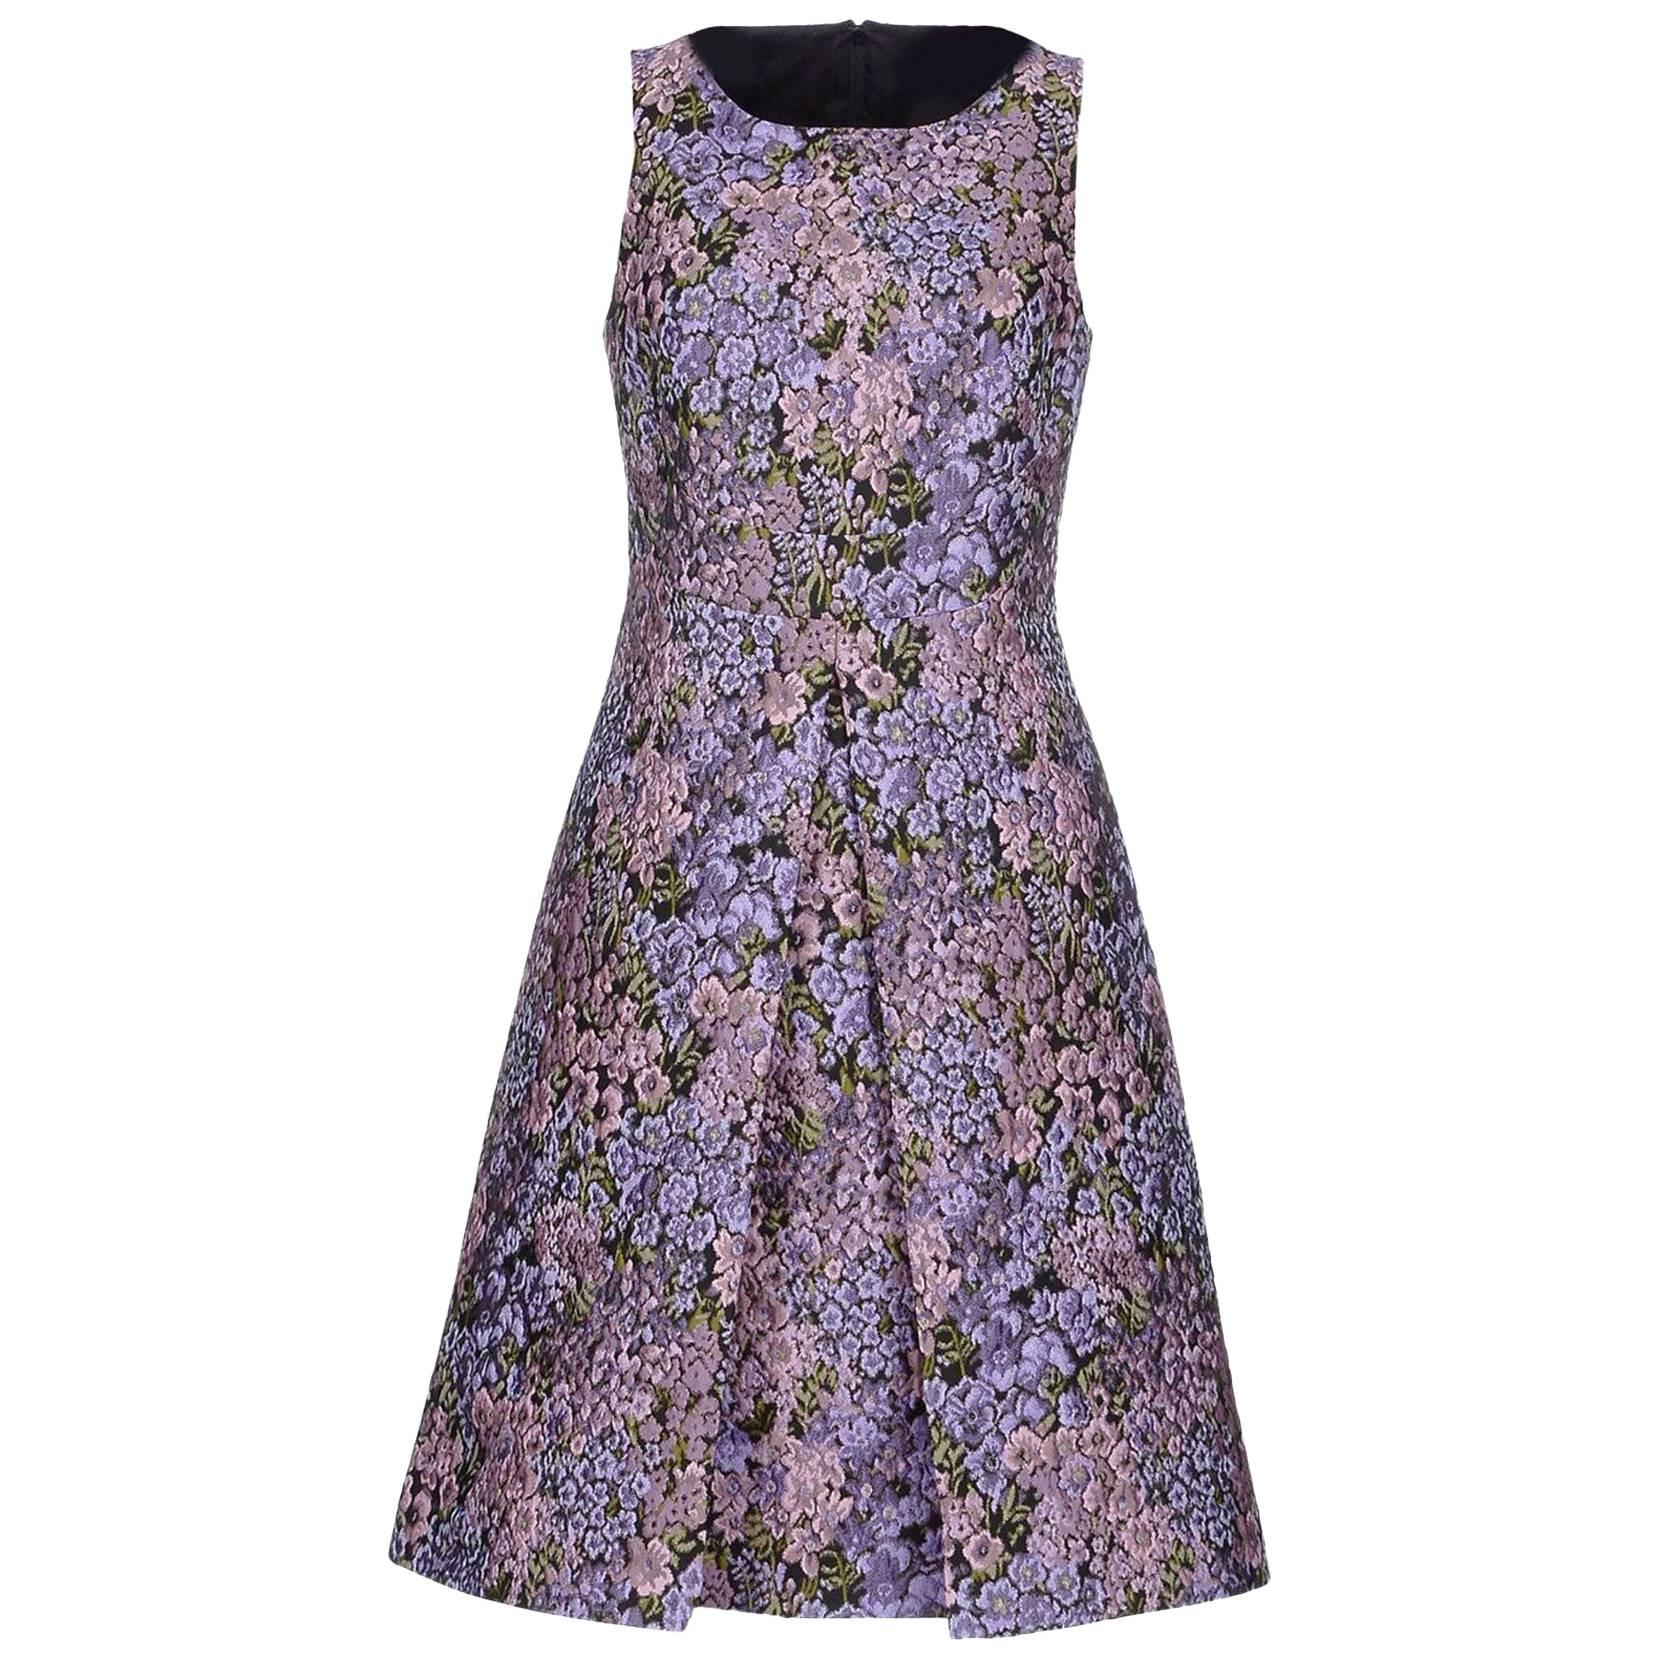 New MICHAEL KORS Jacquard Lilac Floral Design Dress size 12 For Sale at ...